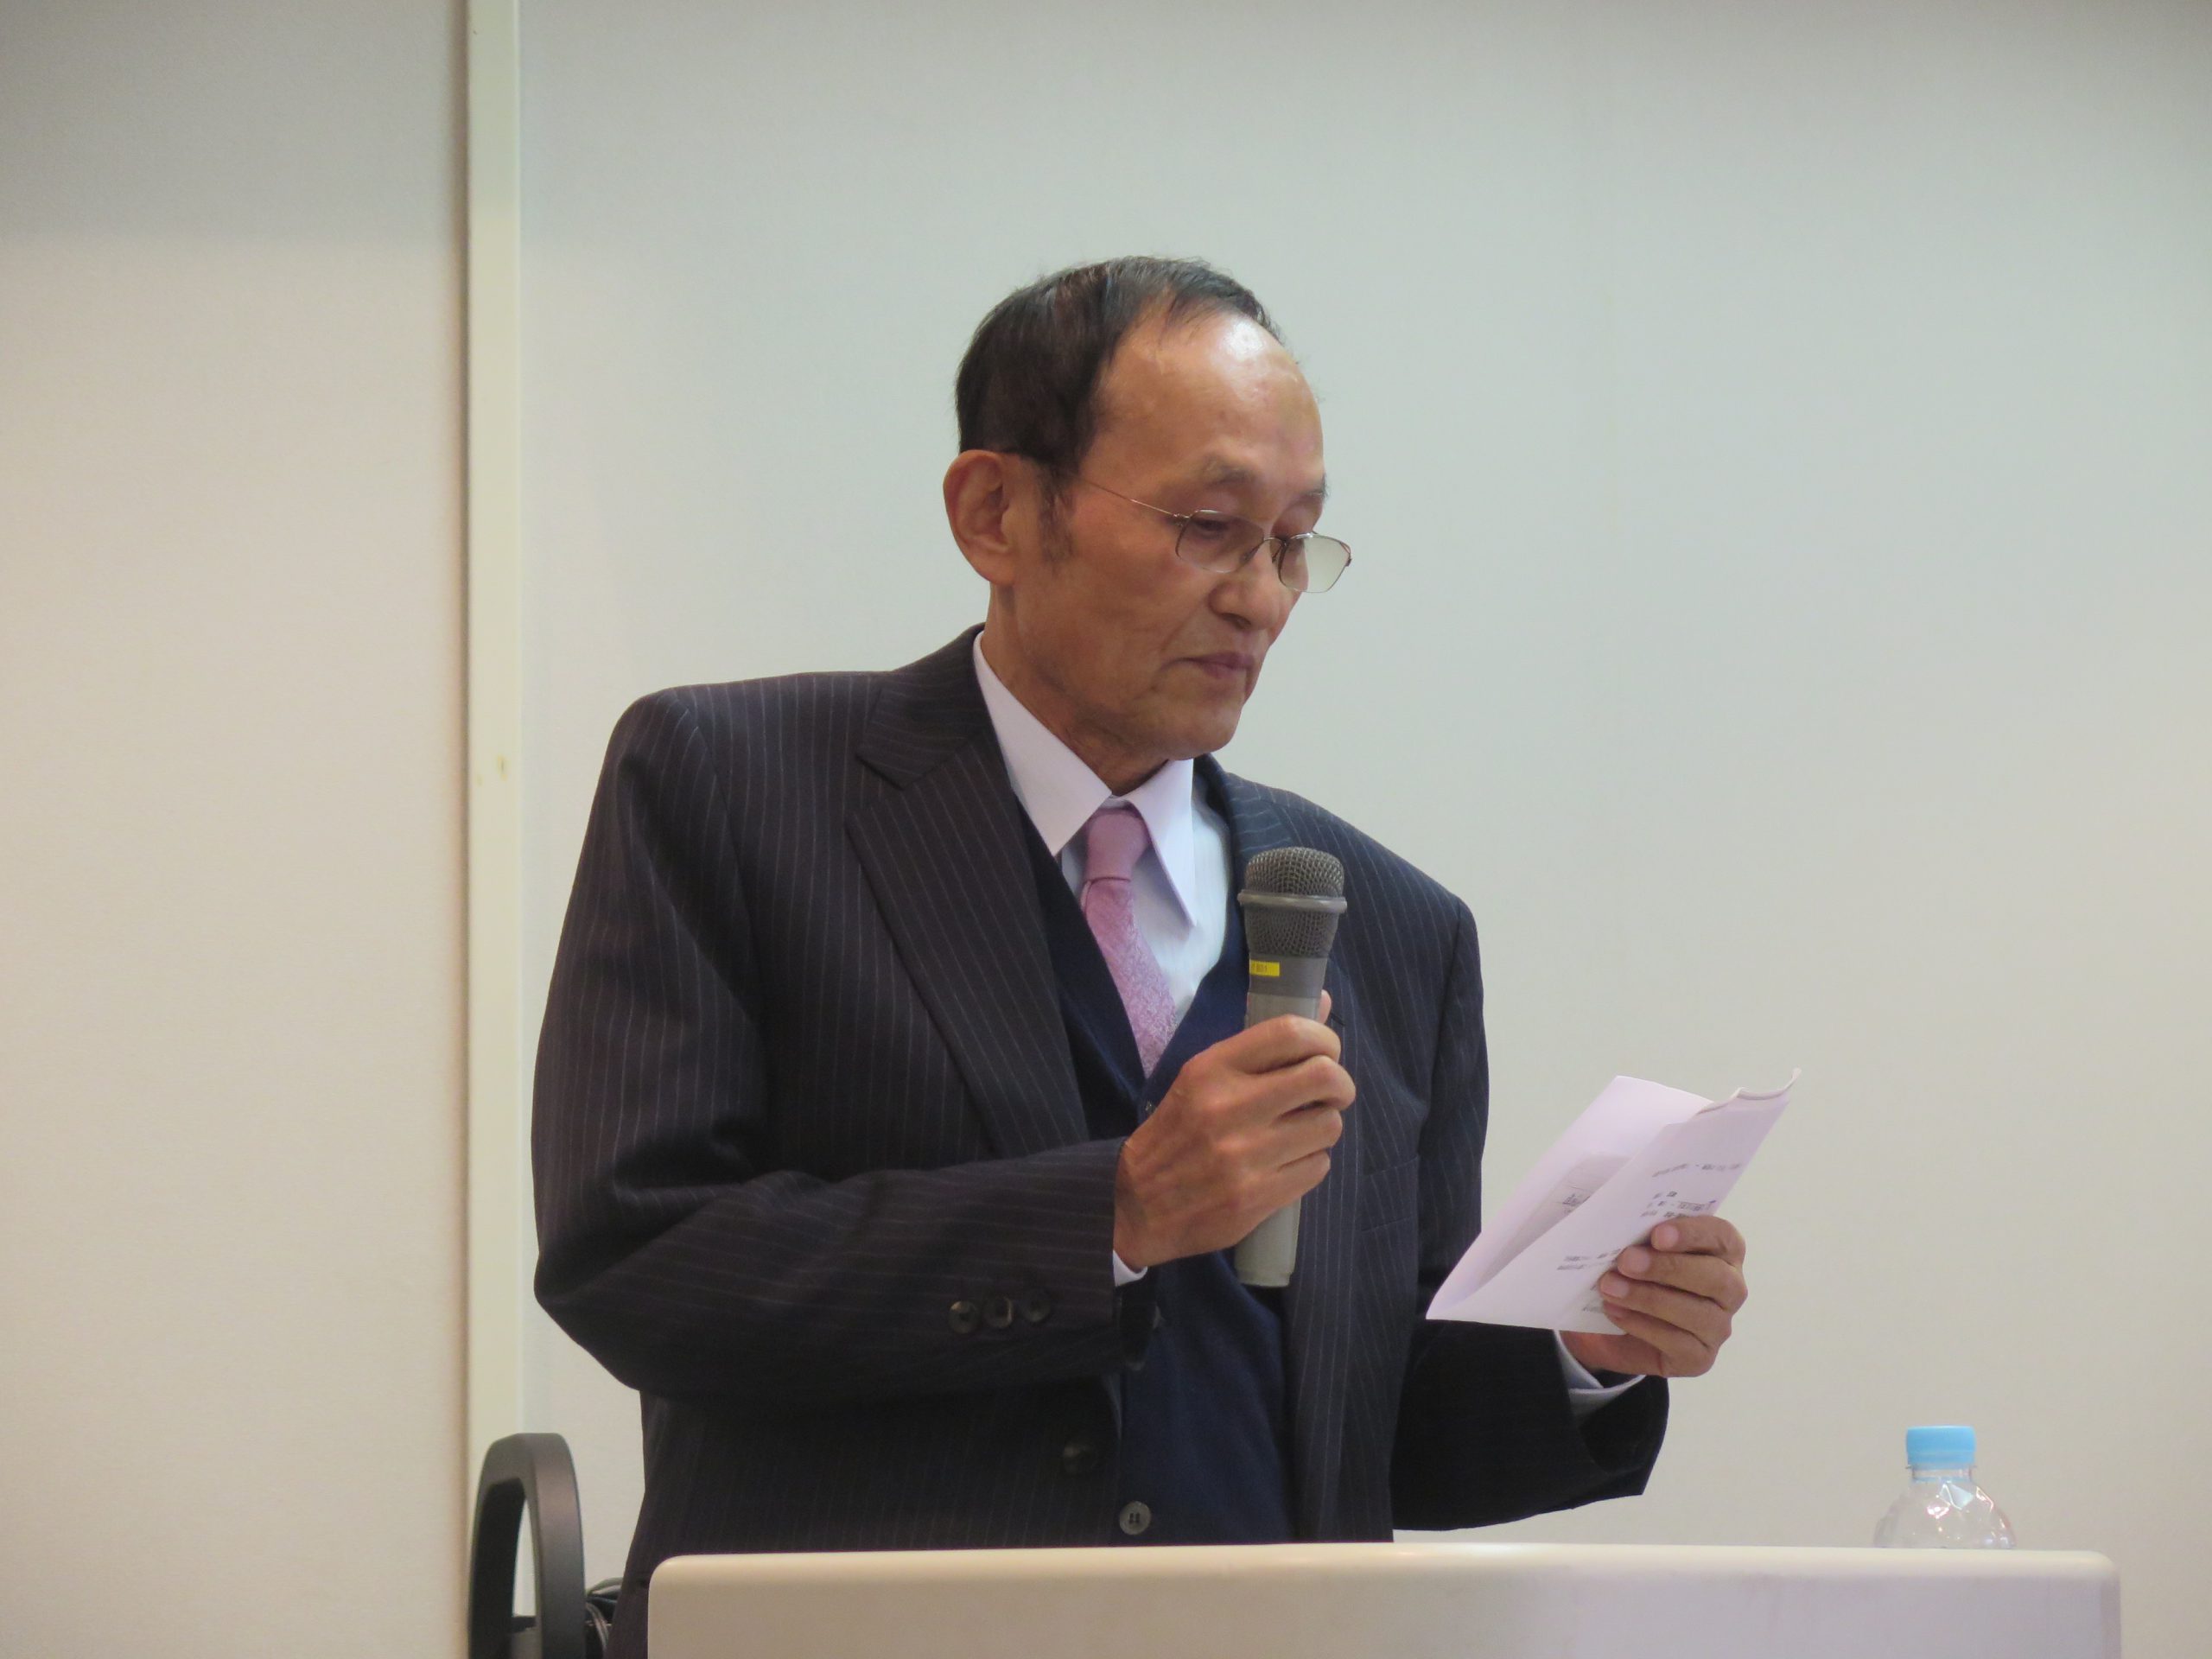 Dr. Malmo Gu, Representative of Hungsadan Japan Branch